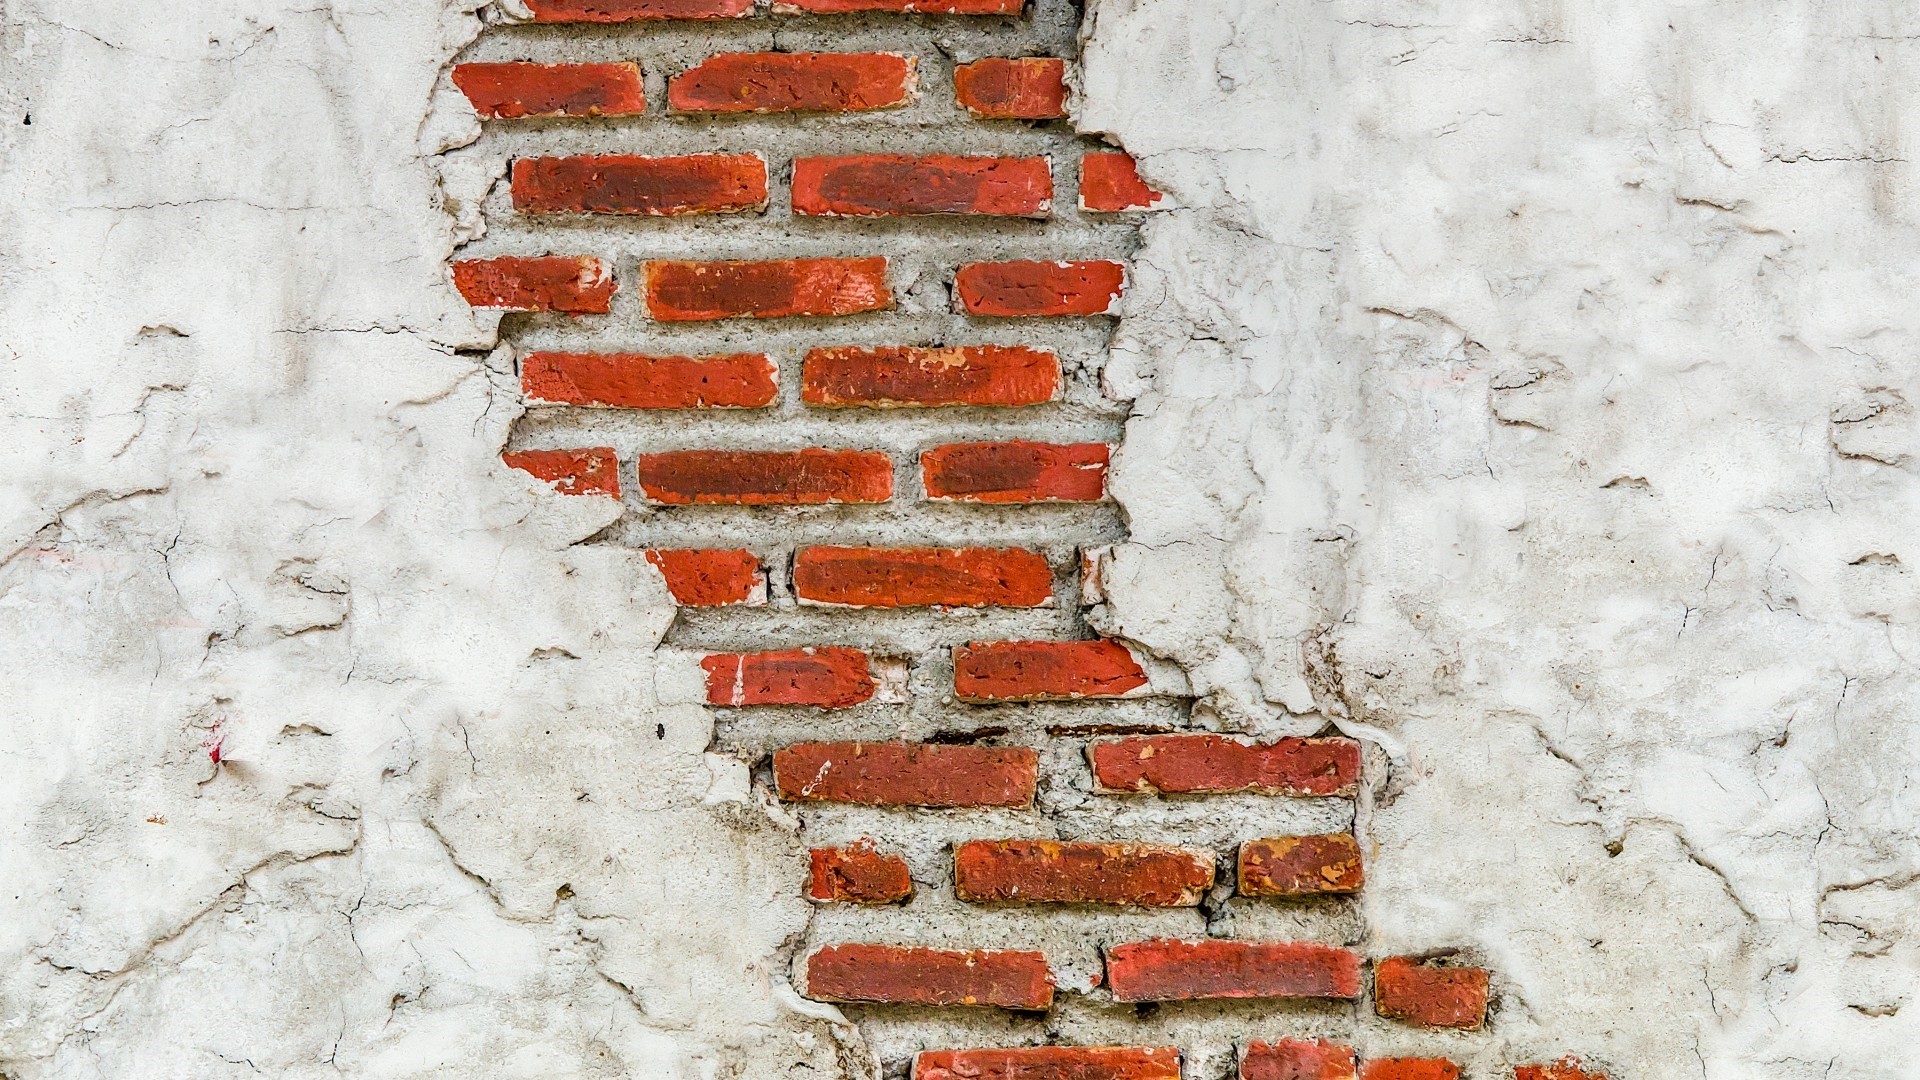 White Brick Wallpaper theme